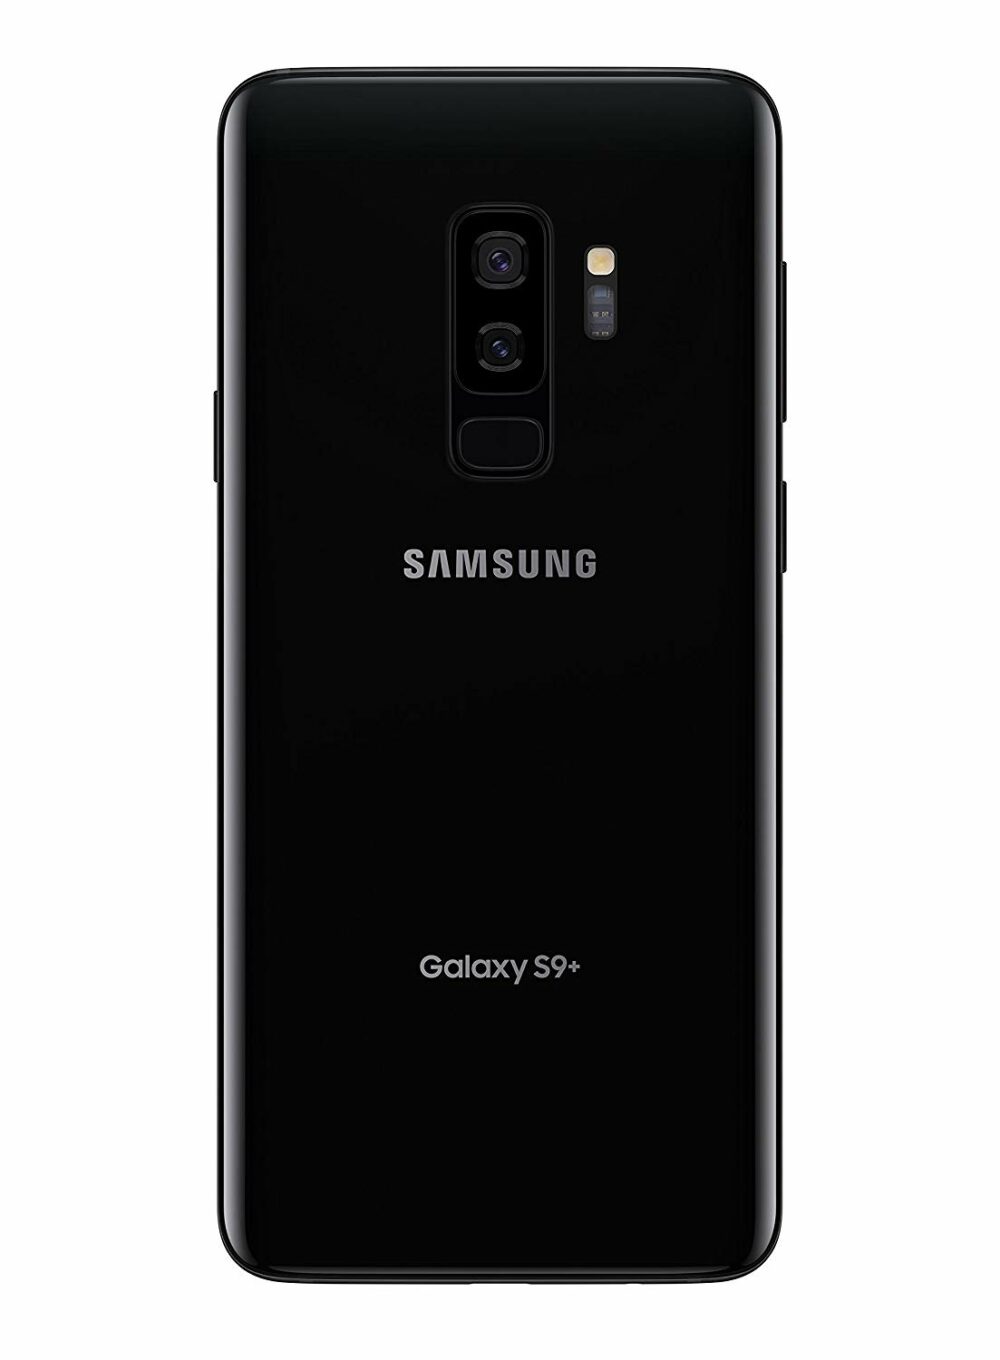 Samsung_Galaxy_S9_Plus_SM-G965U_64GB_Android_Smart_Phone_Verizon_in_Midnight_Black_102336_01